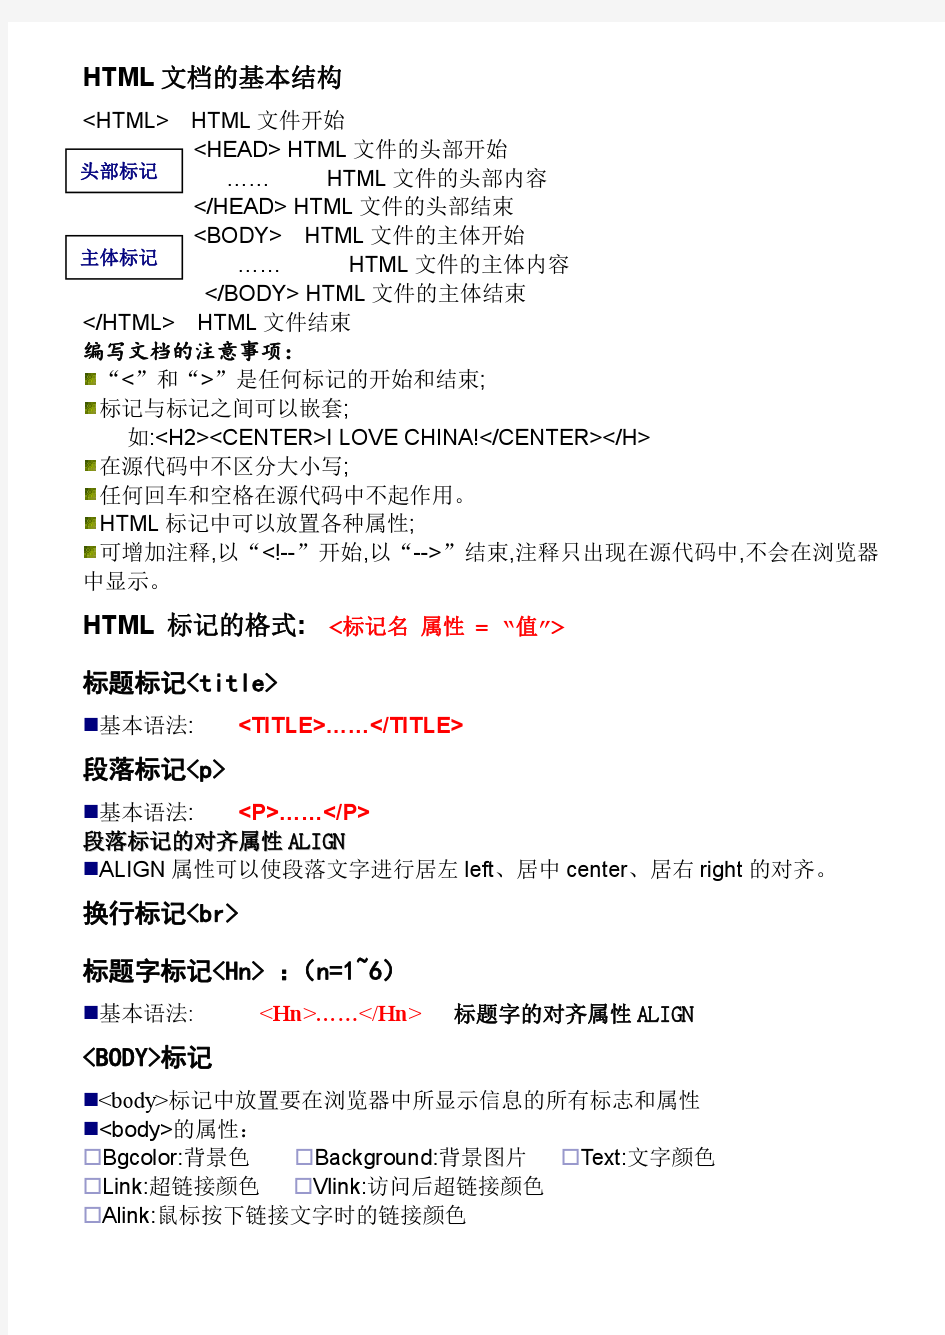 HTML文档的基本语法结构